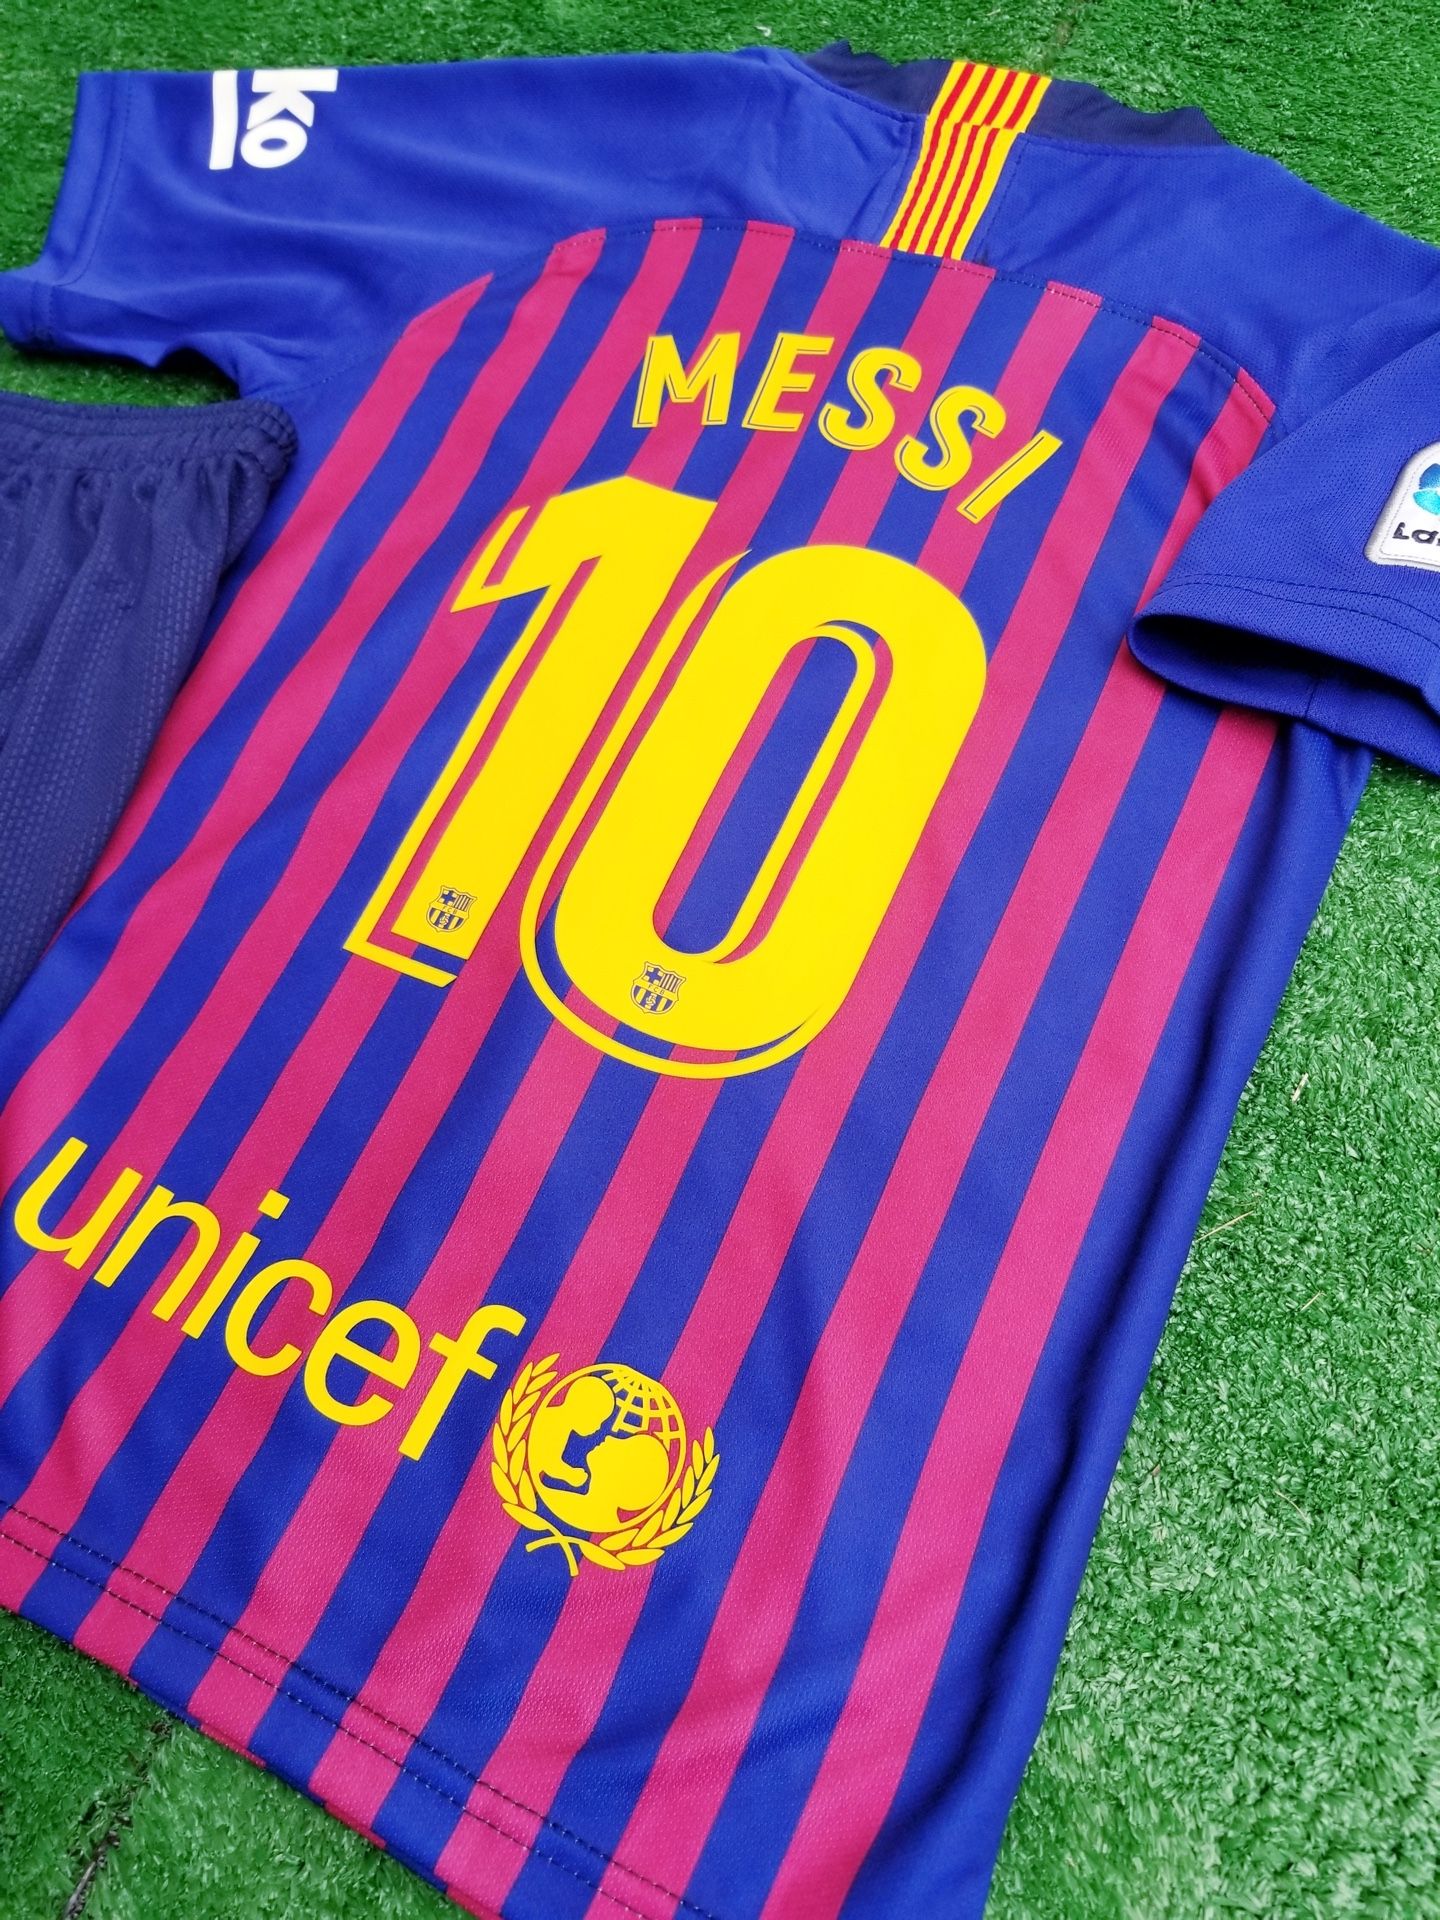 FC Barcelona Qatar Airways #10 Messi Soccer Jersey youth kids children's 14  unicef stripe - Jerseys & Cleats, Facebook Marketplace